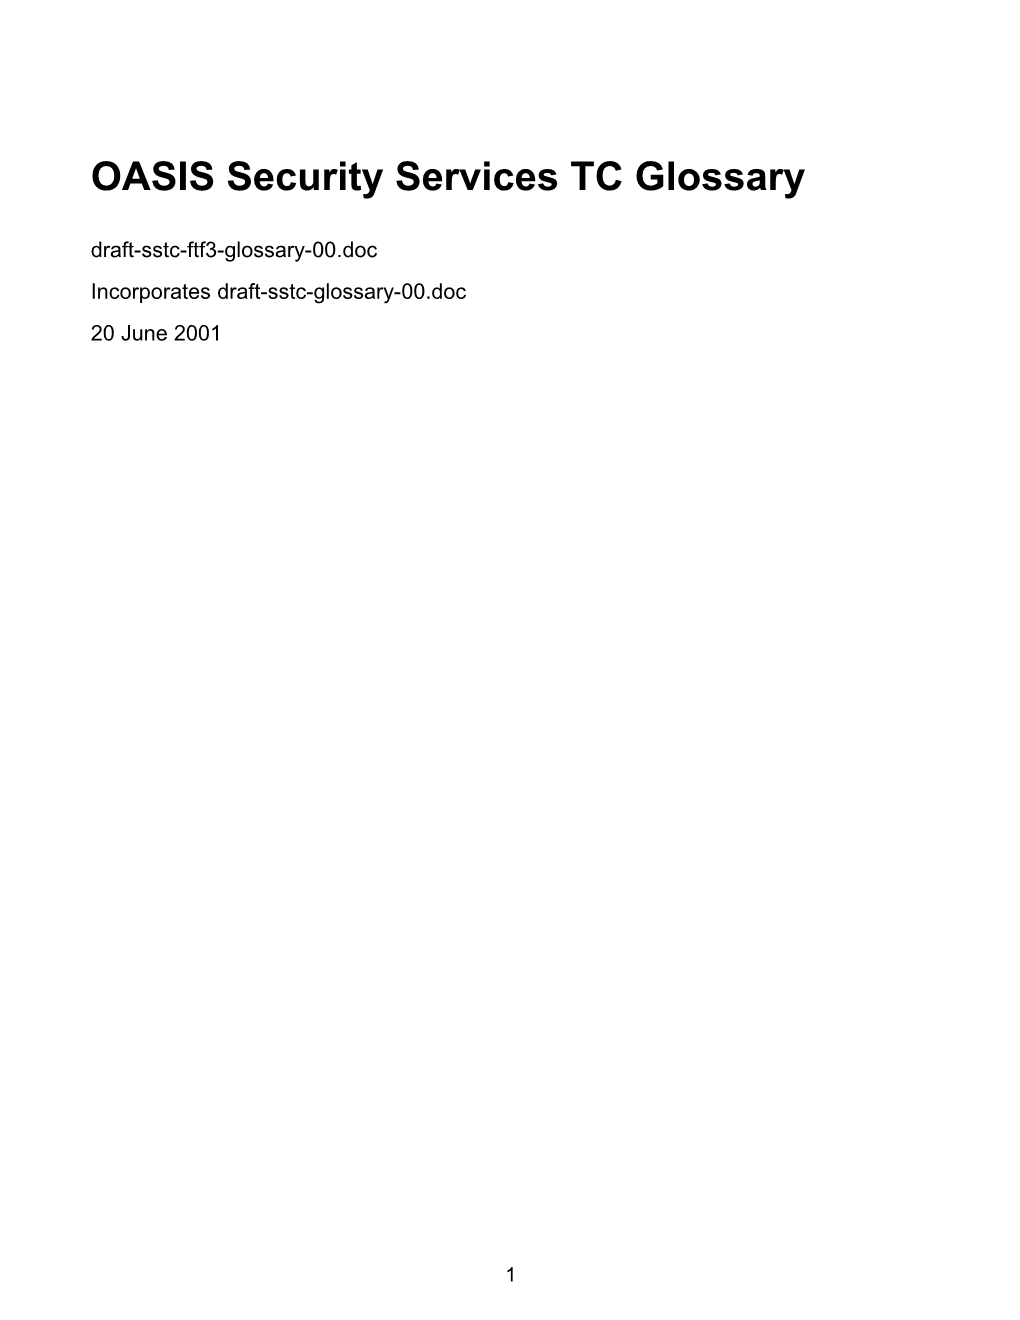 DRAFT OASIS SSTC Glossary: Draft-Sstc-Glossary-00